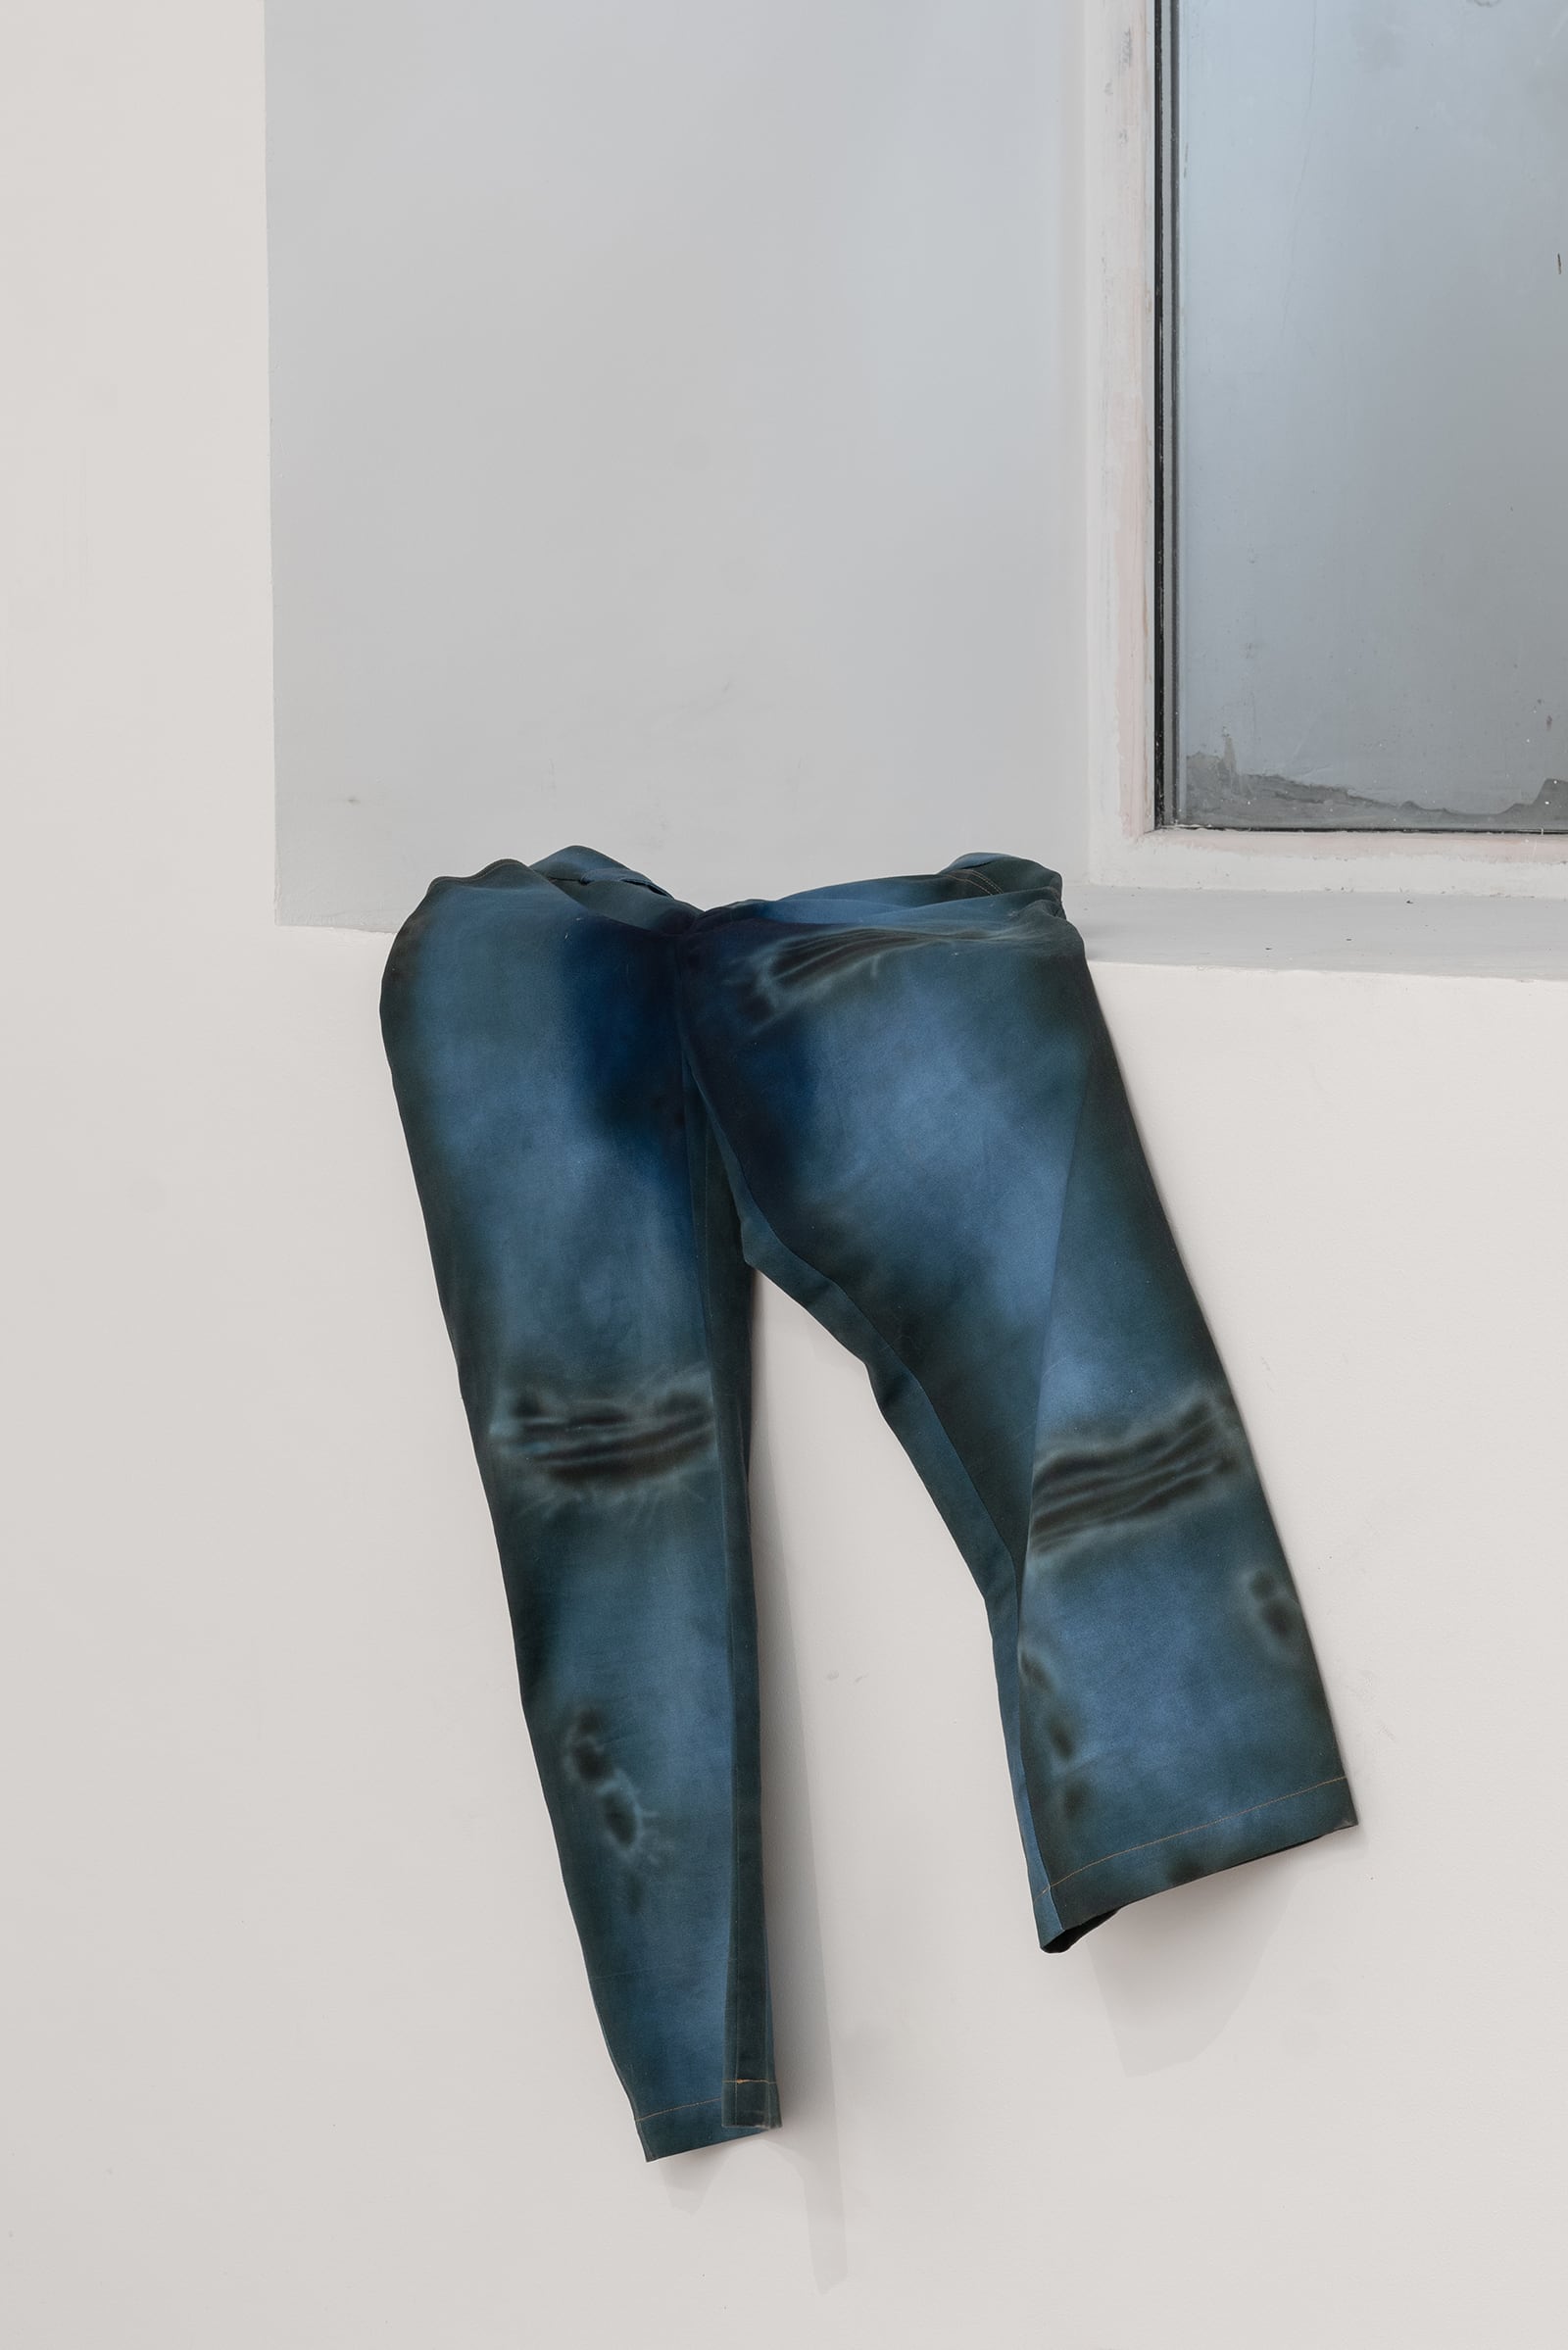 Sasha Yazov, Pissed pants, 2022, acrylic on textile, dimensions vary